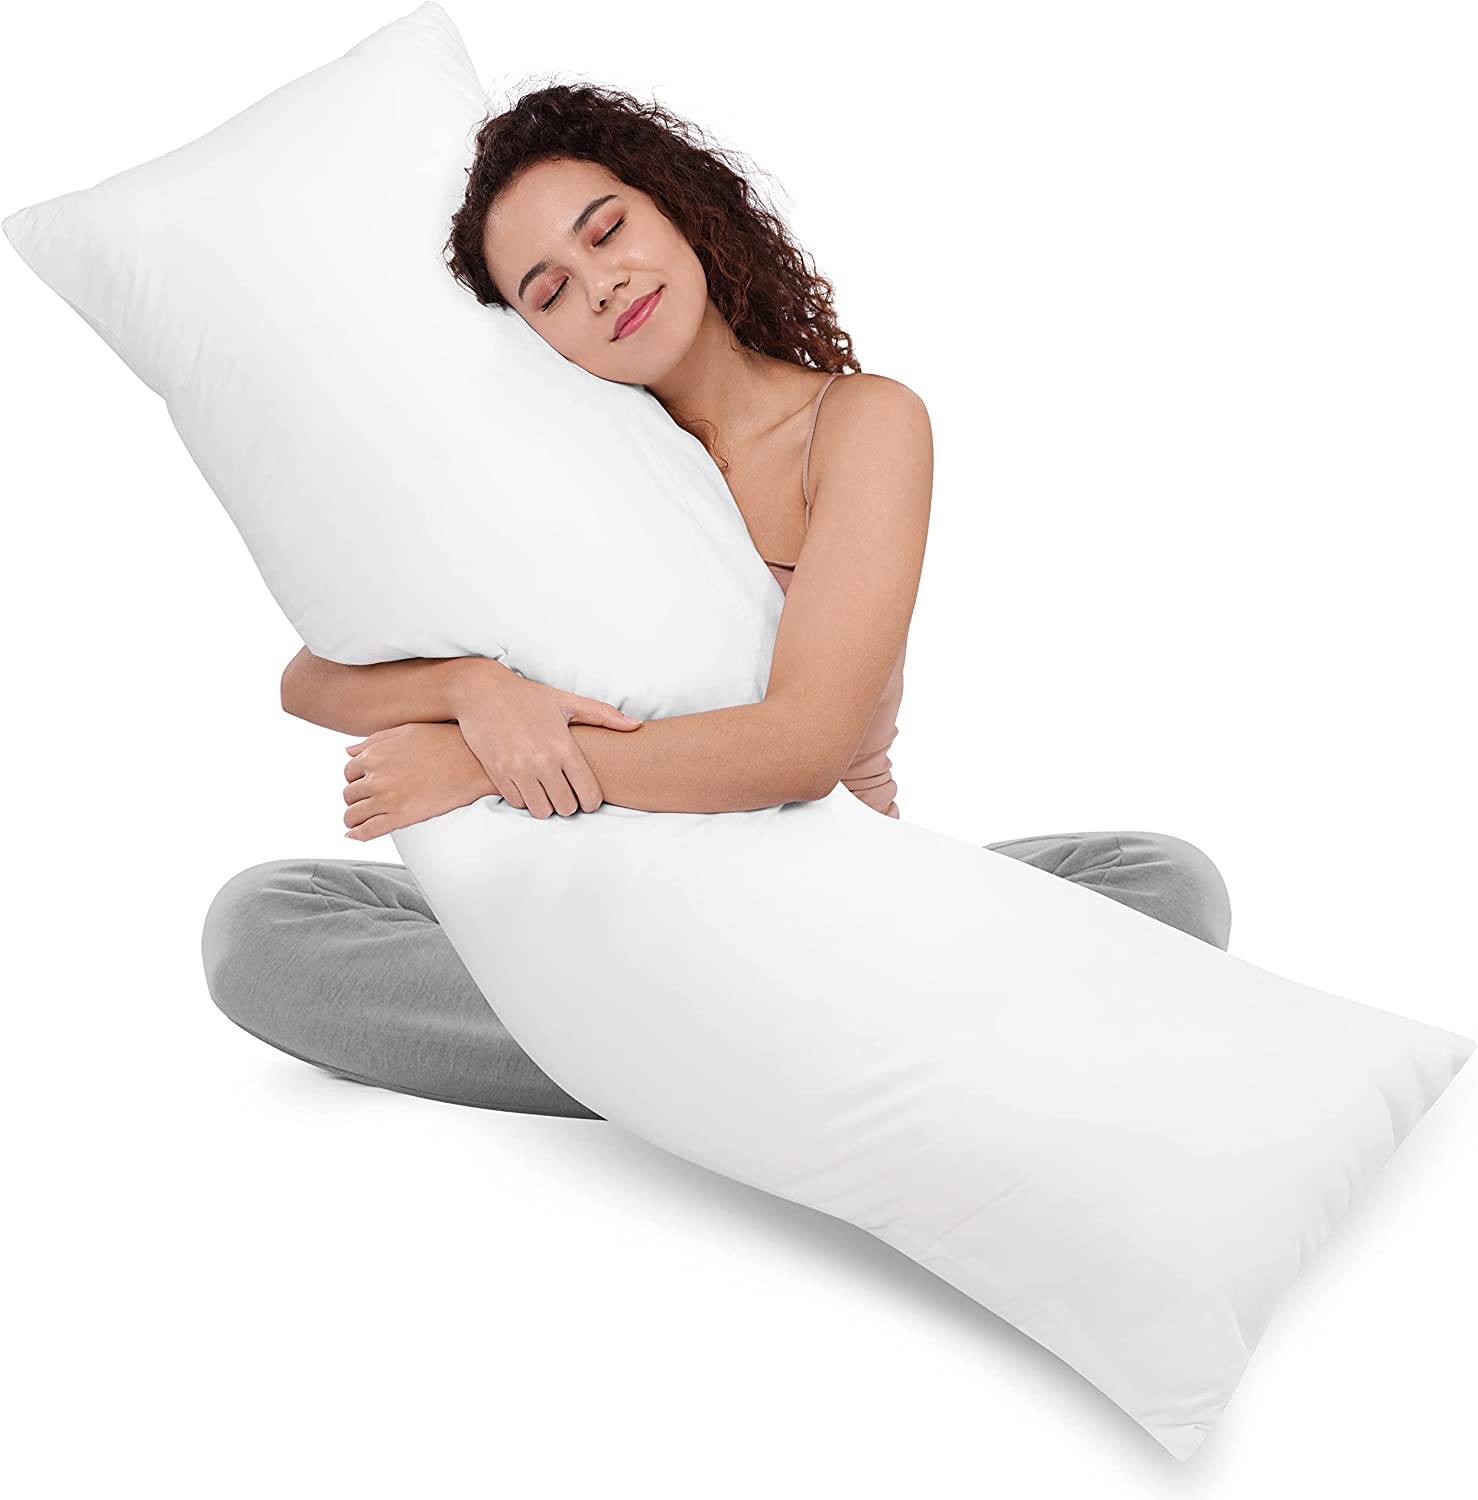 Utopia Bedding Throw Pillows Insert (Pack of 2, White) - 18 x 18